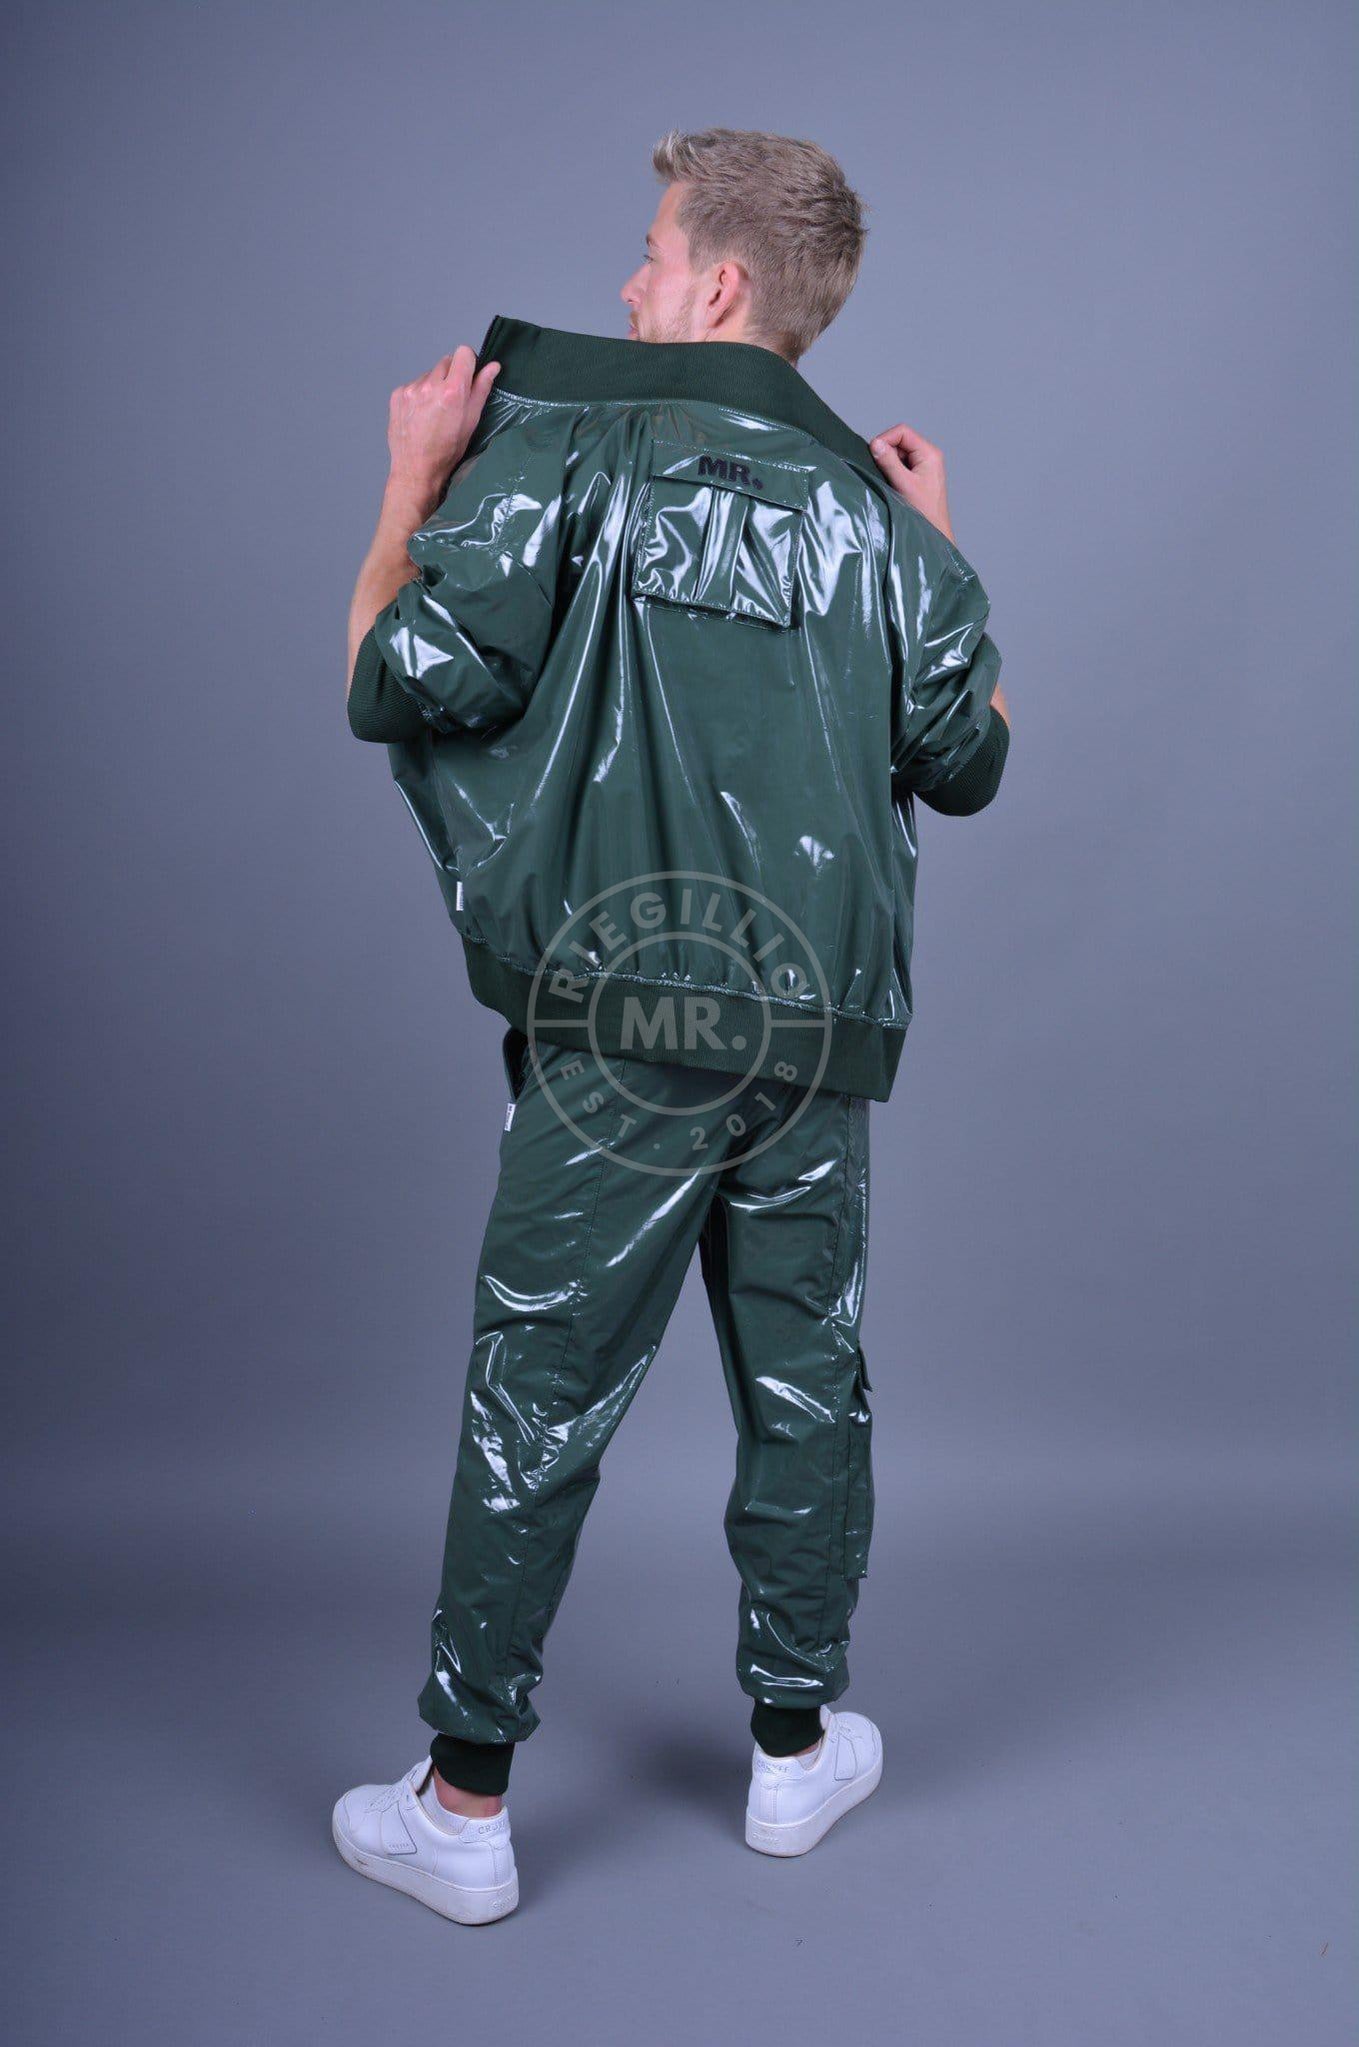 Green PVC Tracksuit Oversized Jacket at MR. Riegillio